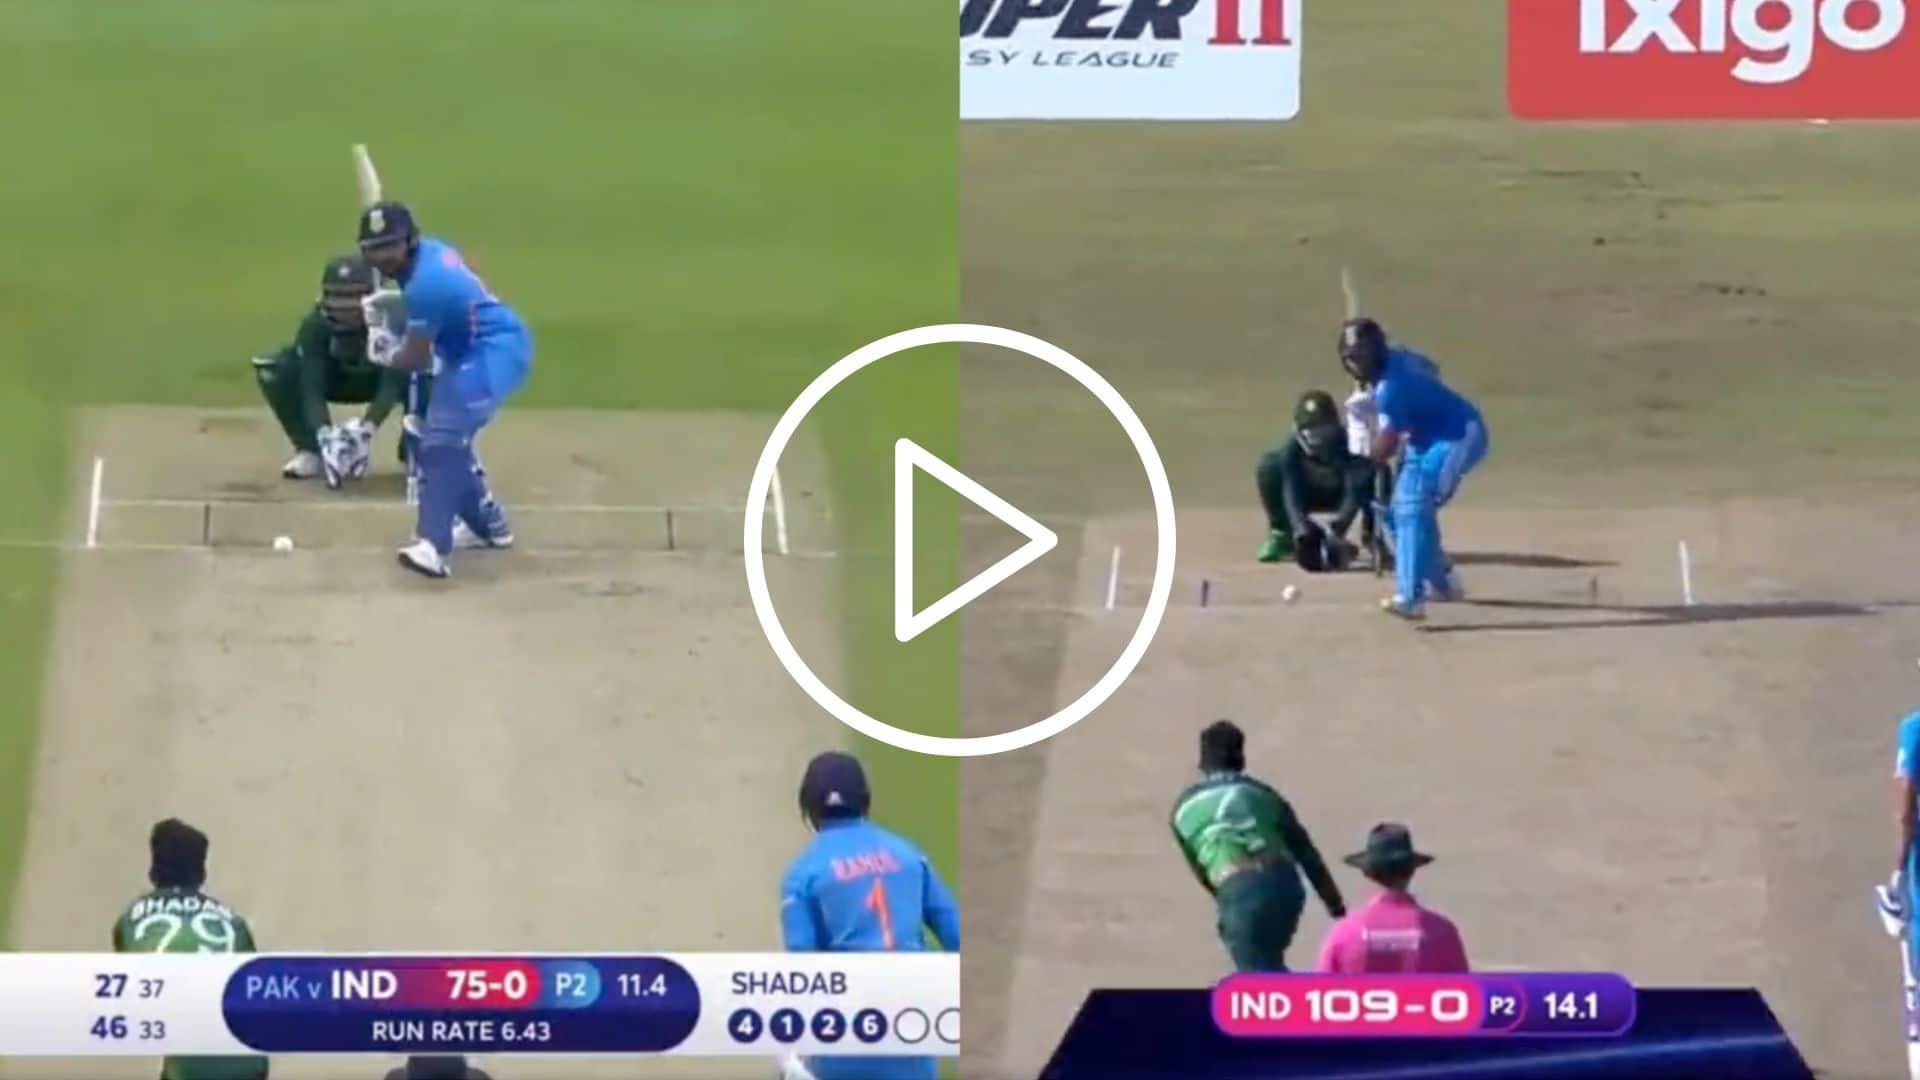 [Watch] Rohit Sharma Creates Similar Scenes Like 2019 WC As Shadab Khan Gets Thumped